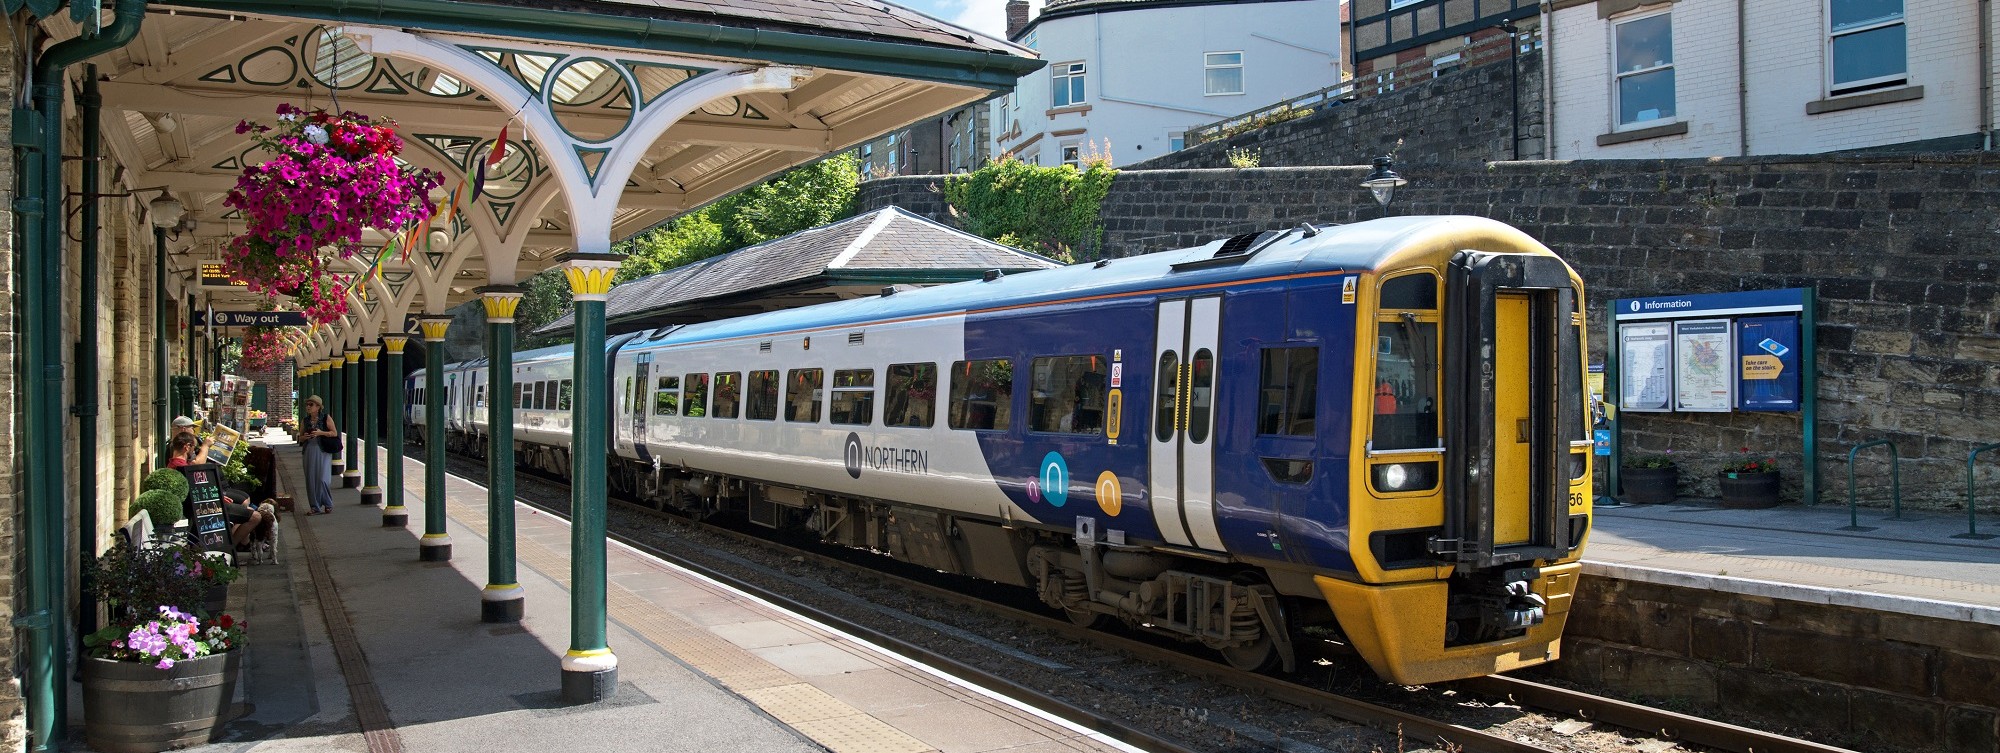 image-shows-northern-train-at-knaresborough-station